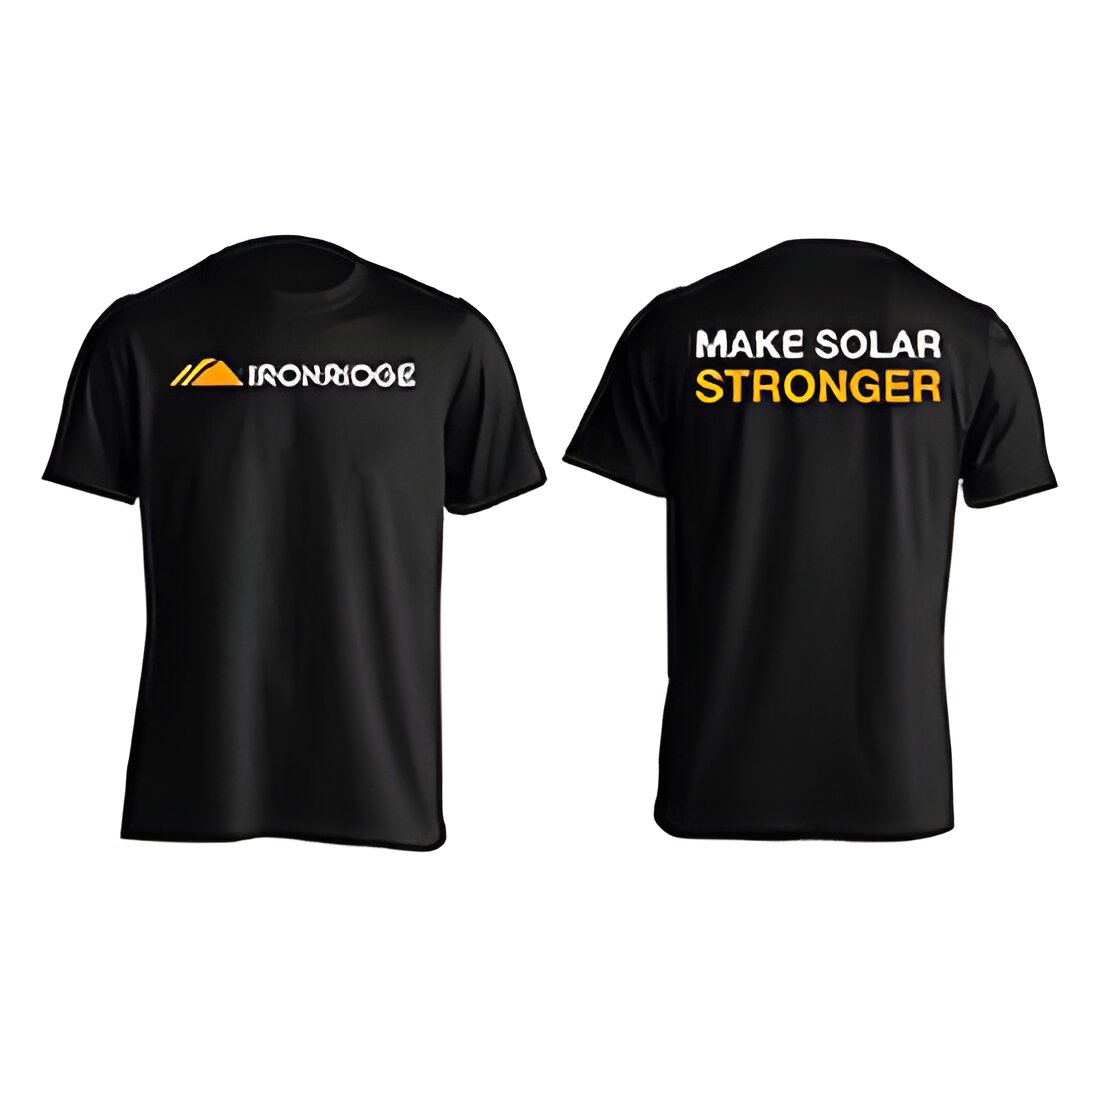 Free Ironridge T-Shirt And Demo Kit For Solar Professionals